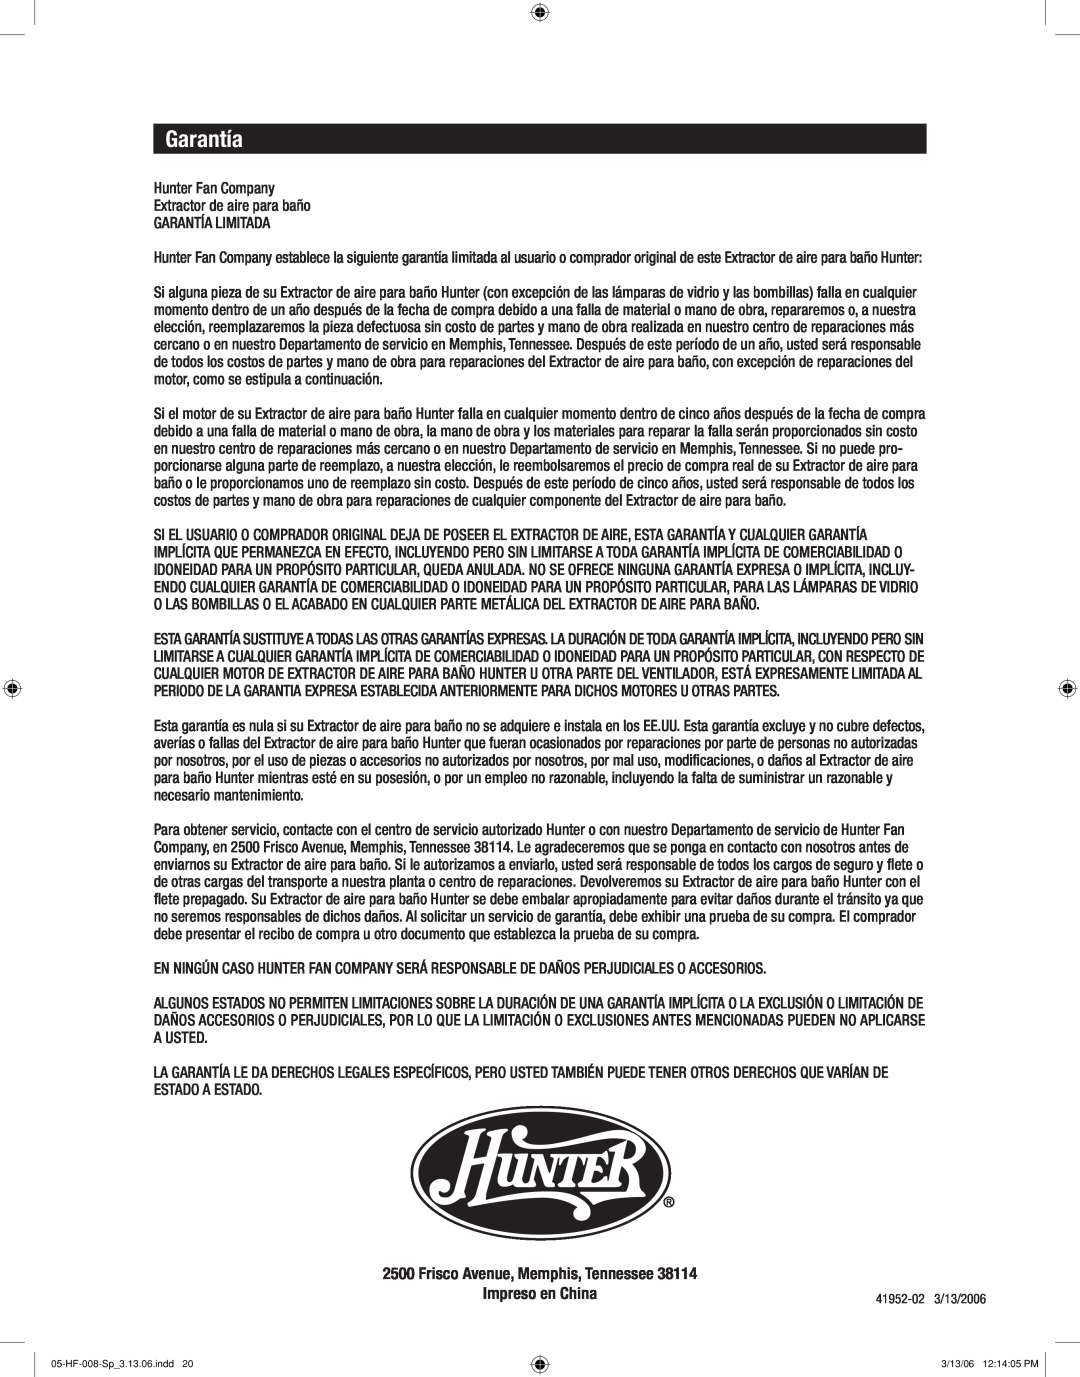 Hunter,R.F 83005 manual Garantía, Frisco Avenue, Memphis, Tennessee Impreso en China 